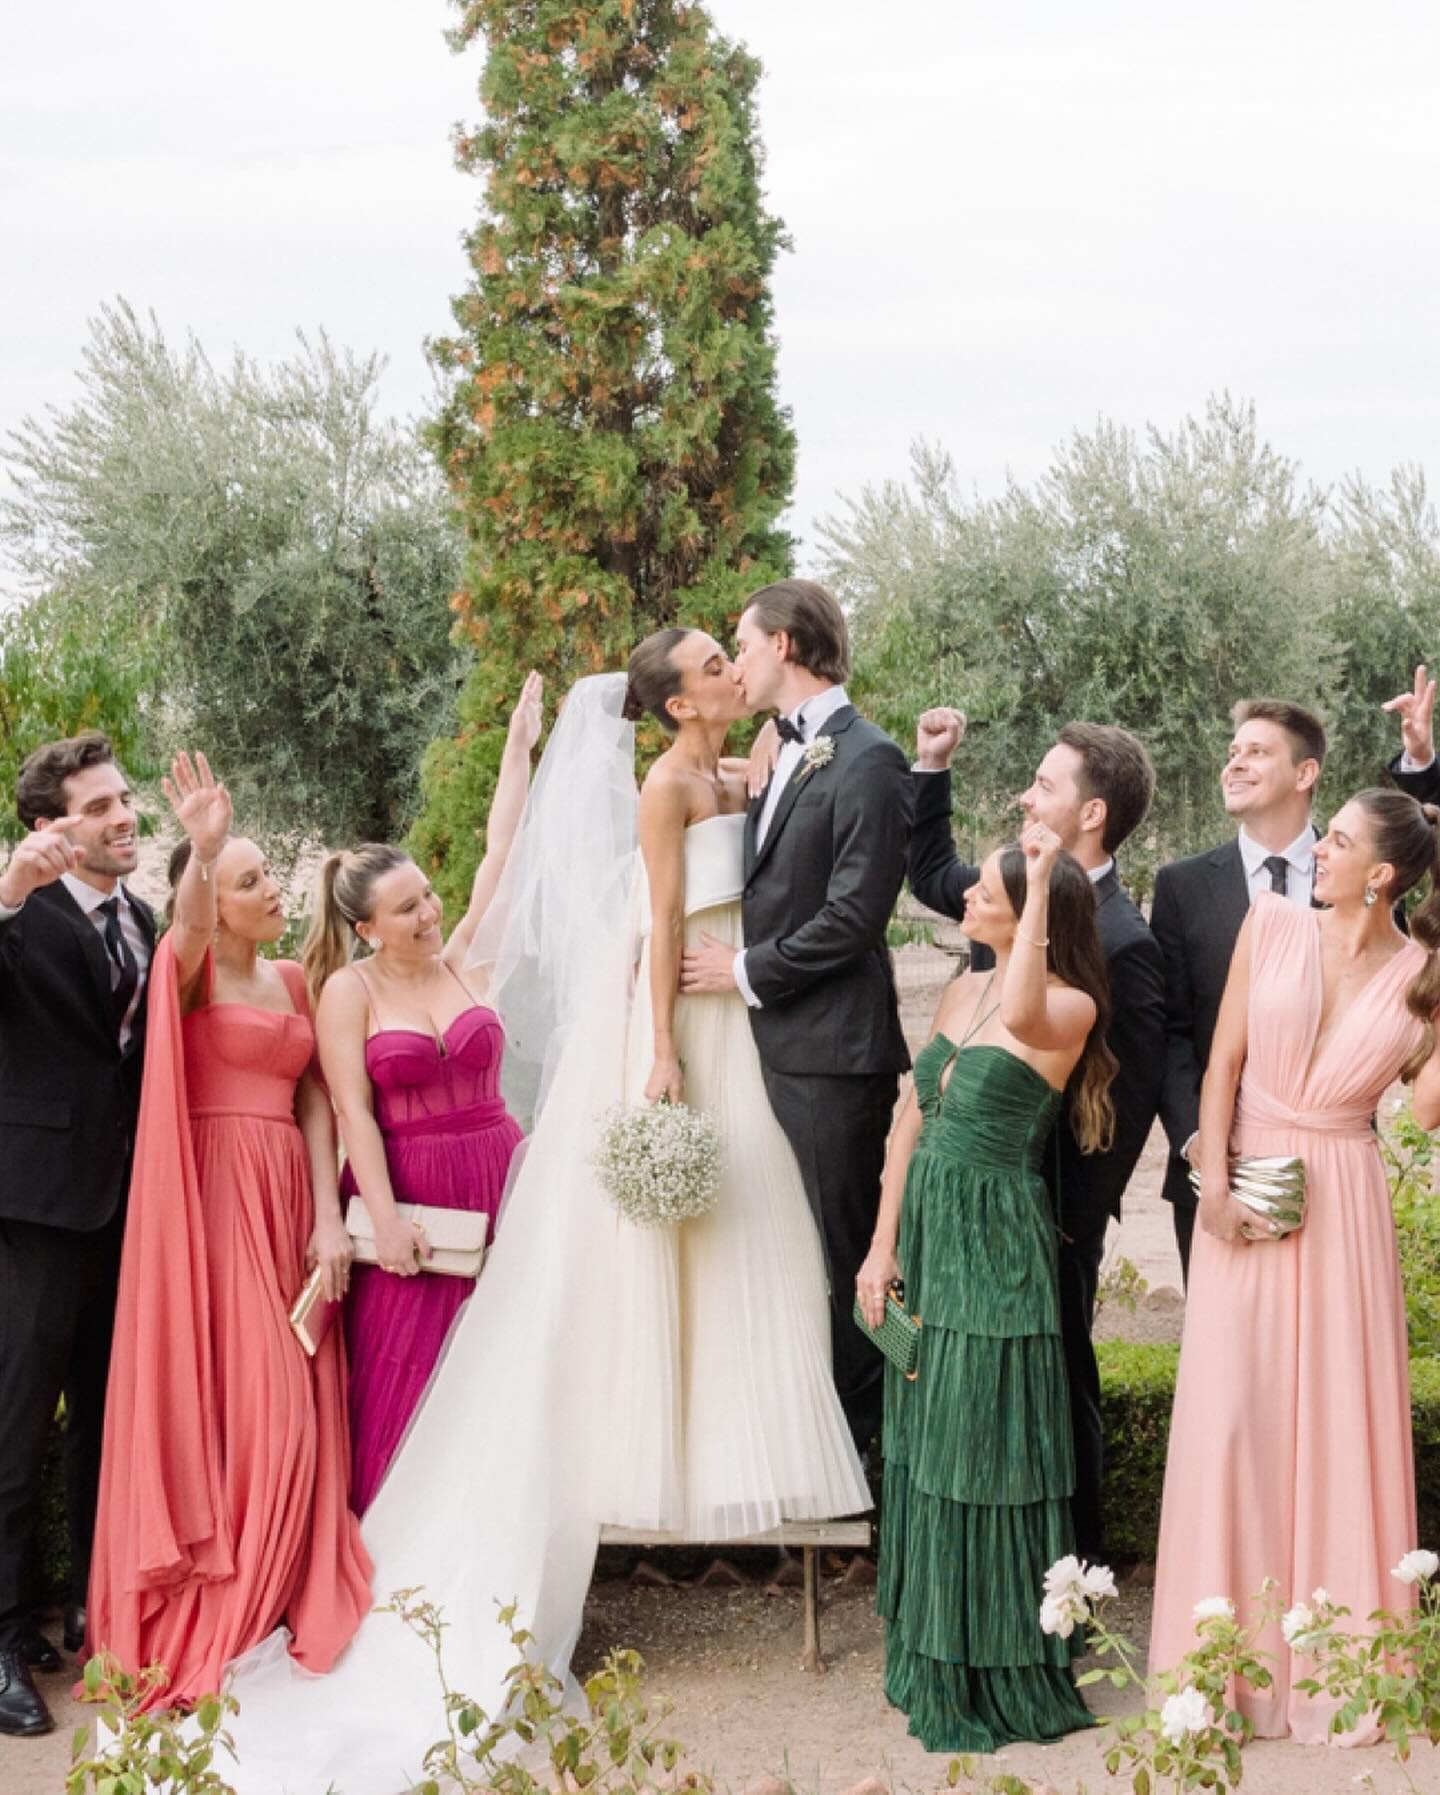 PORTRAIT VIBES 
Mendoza Wedding 
#TIMELESSMEMORIES

Wp: @marinacookassessoria 
Lugar: @bodegavistalba 
Decor: @laurabringas_ Dress: @carlosbacchi

#weddingmendoza #mendozawedding #casamientomendoza
#weddingambas #ValledeUco #vineyards.